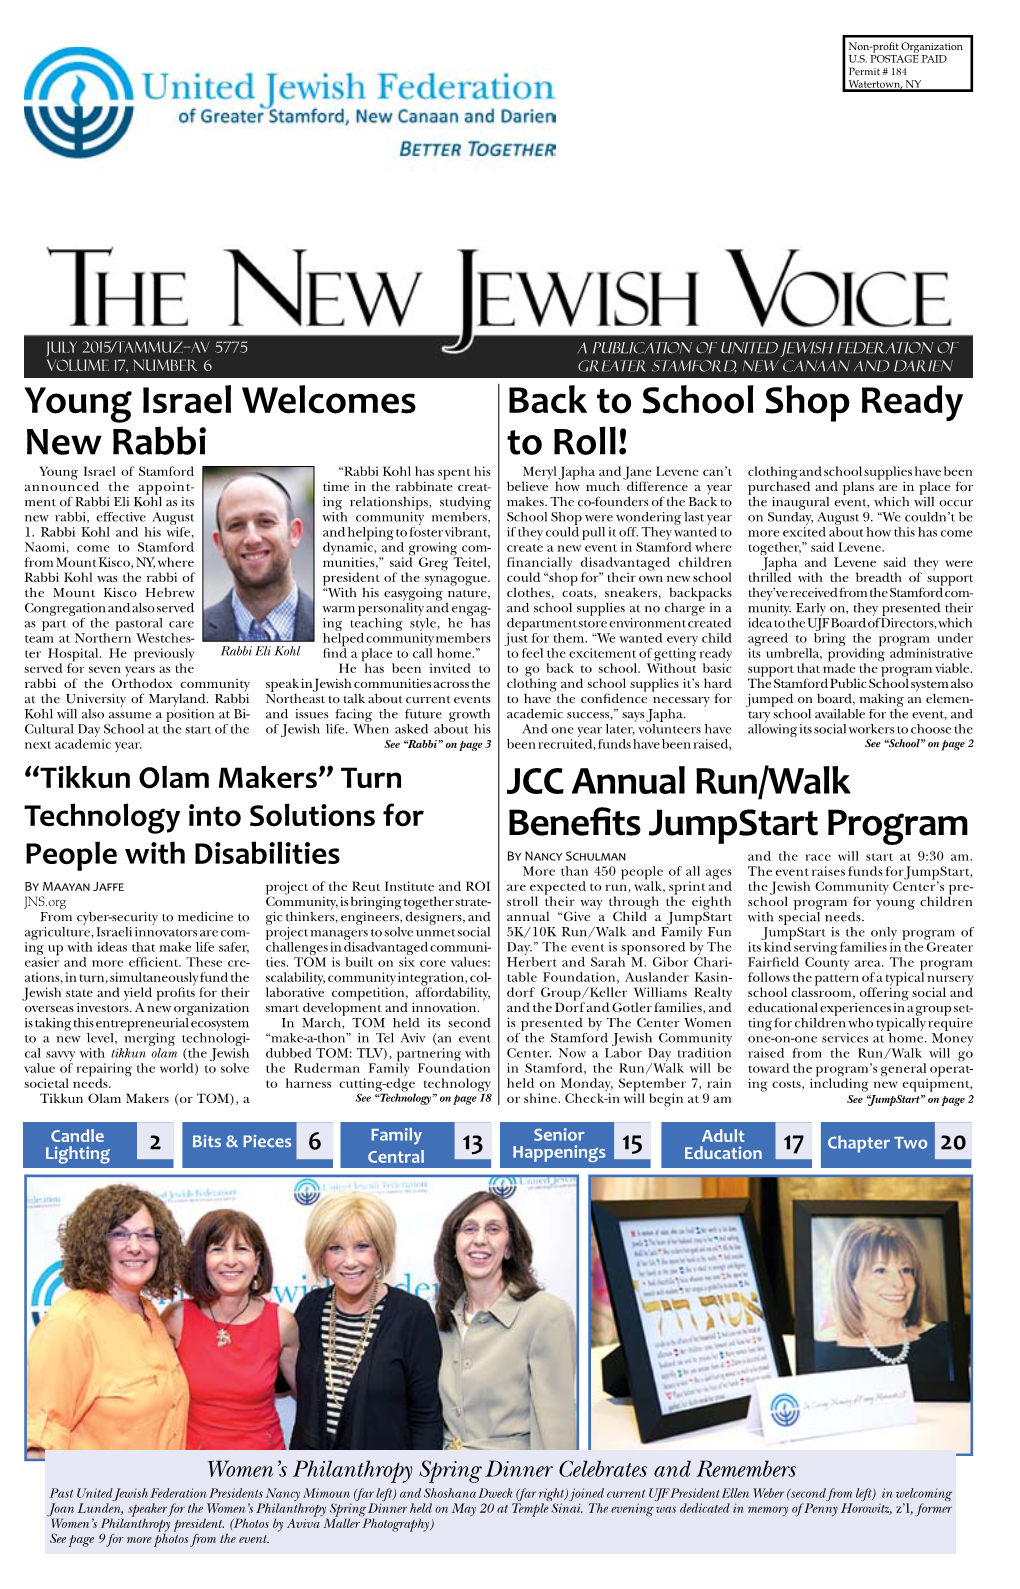 Young Israel Welcomes New Rabbi Back to School Shop Ready to Roll! JCC Annual Run/Walk Benefits Jumpstart Program